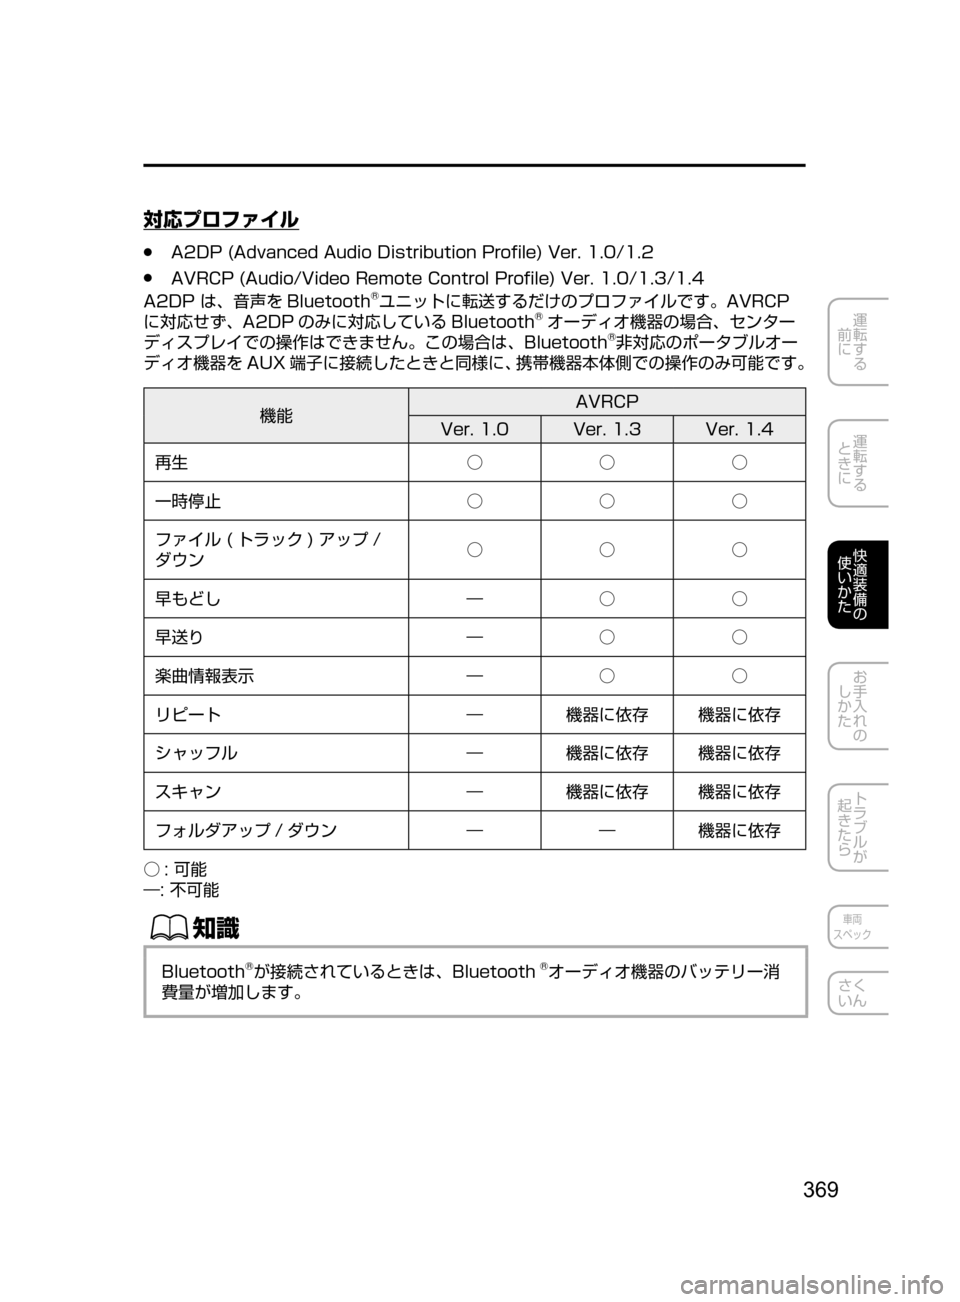 MAZDA MODEL ATENZA 2016  アテンザ｜取扱説明書 (in Japanese) 369
運転する
﻿﻿
前に
運転する
﻿﻿
ときに
快適装備の
使いかた
お手入れの
しかた
トラブルが
起きたら
車両
スペック
さく
いん
対応プロファイ